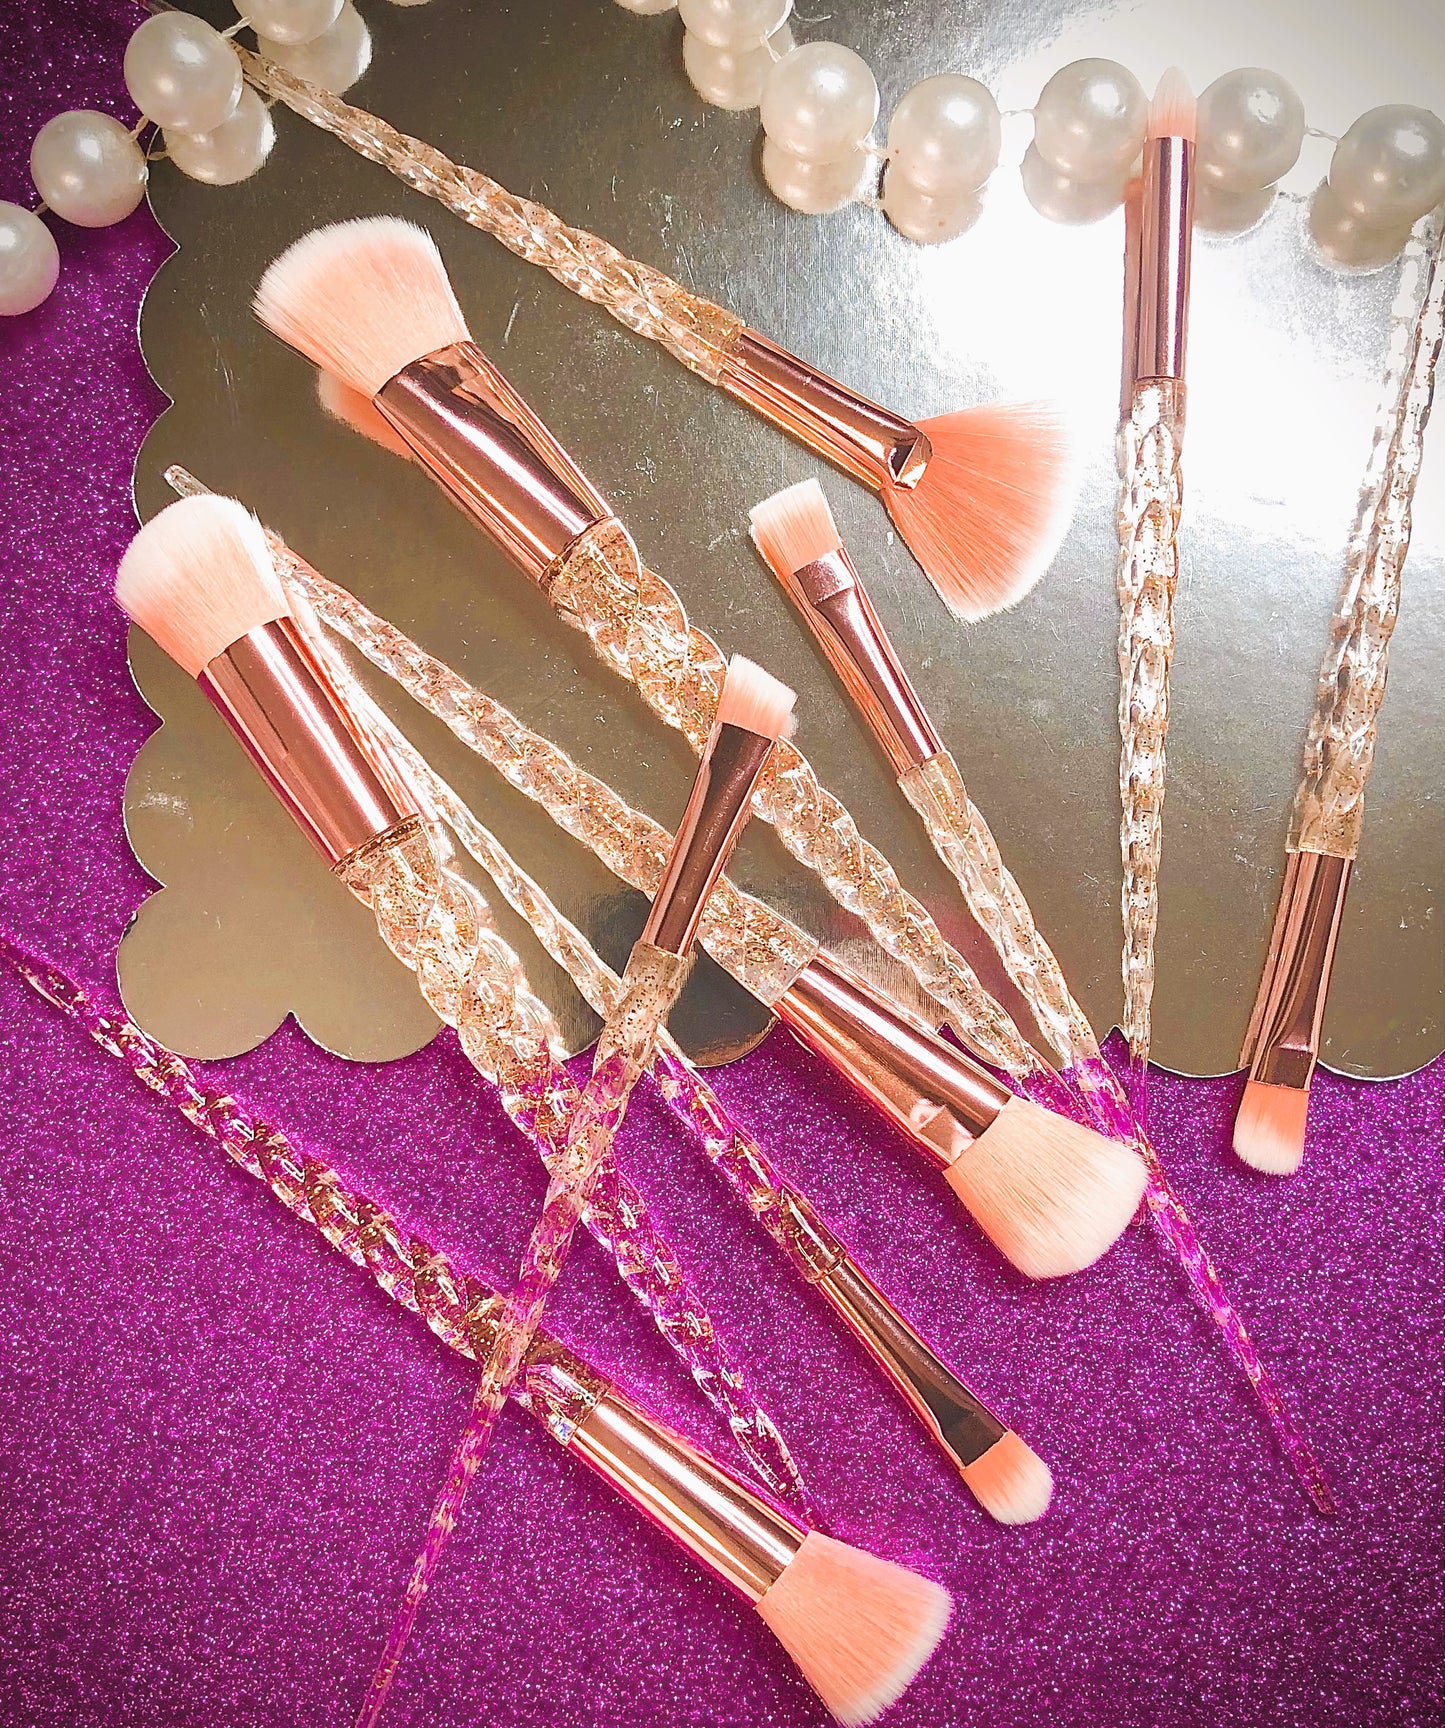 Make-up Brushes, Lt Pink Glitter Unicorn, 10pcs